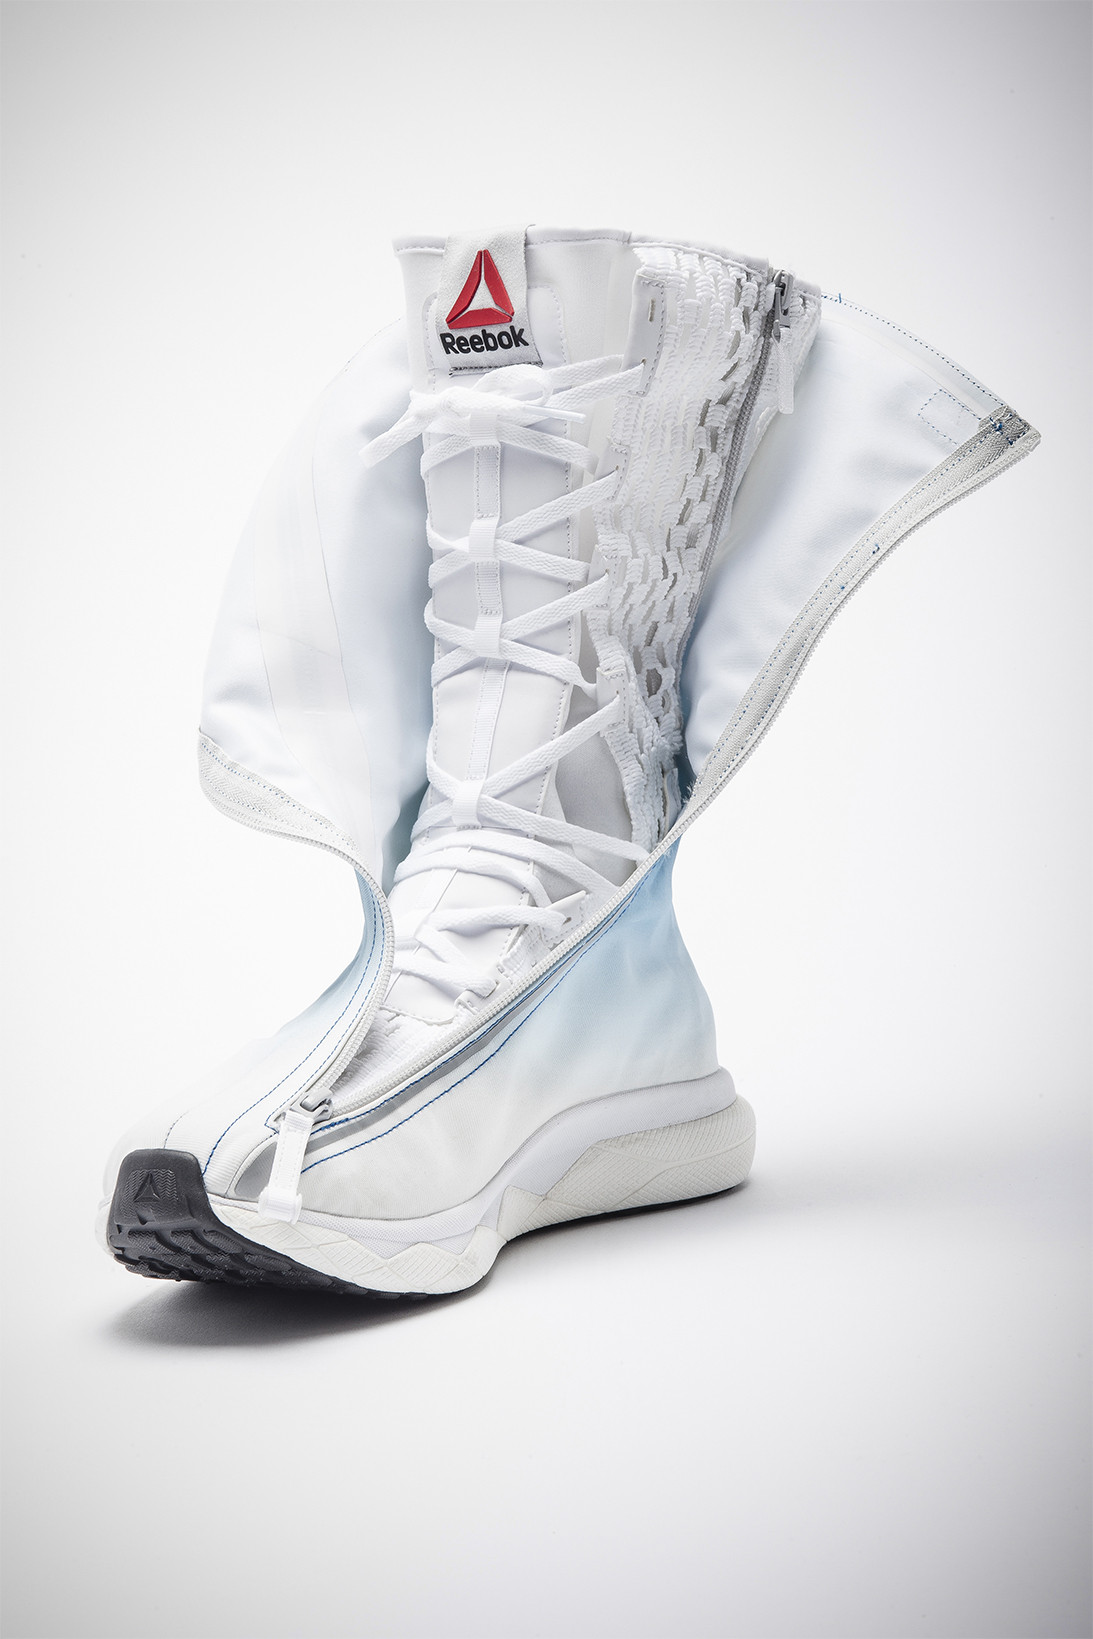 Reebok,Floatride Energy Argus  当年穿这个系列真能上天！民用版太空鞋即将发售！